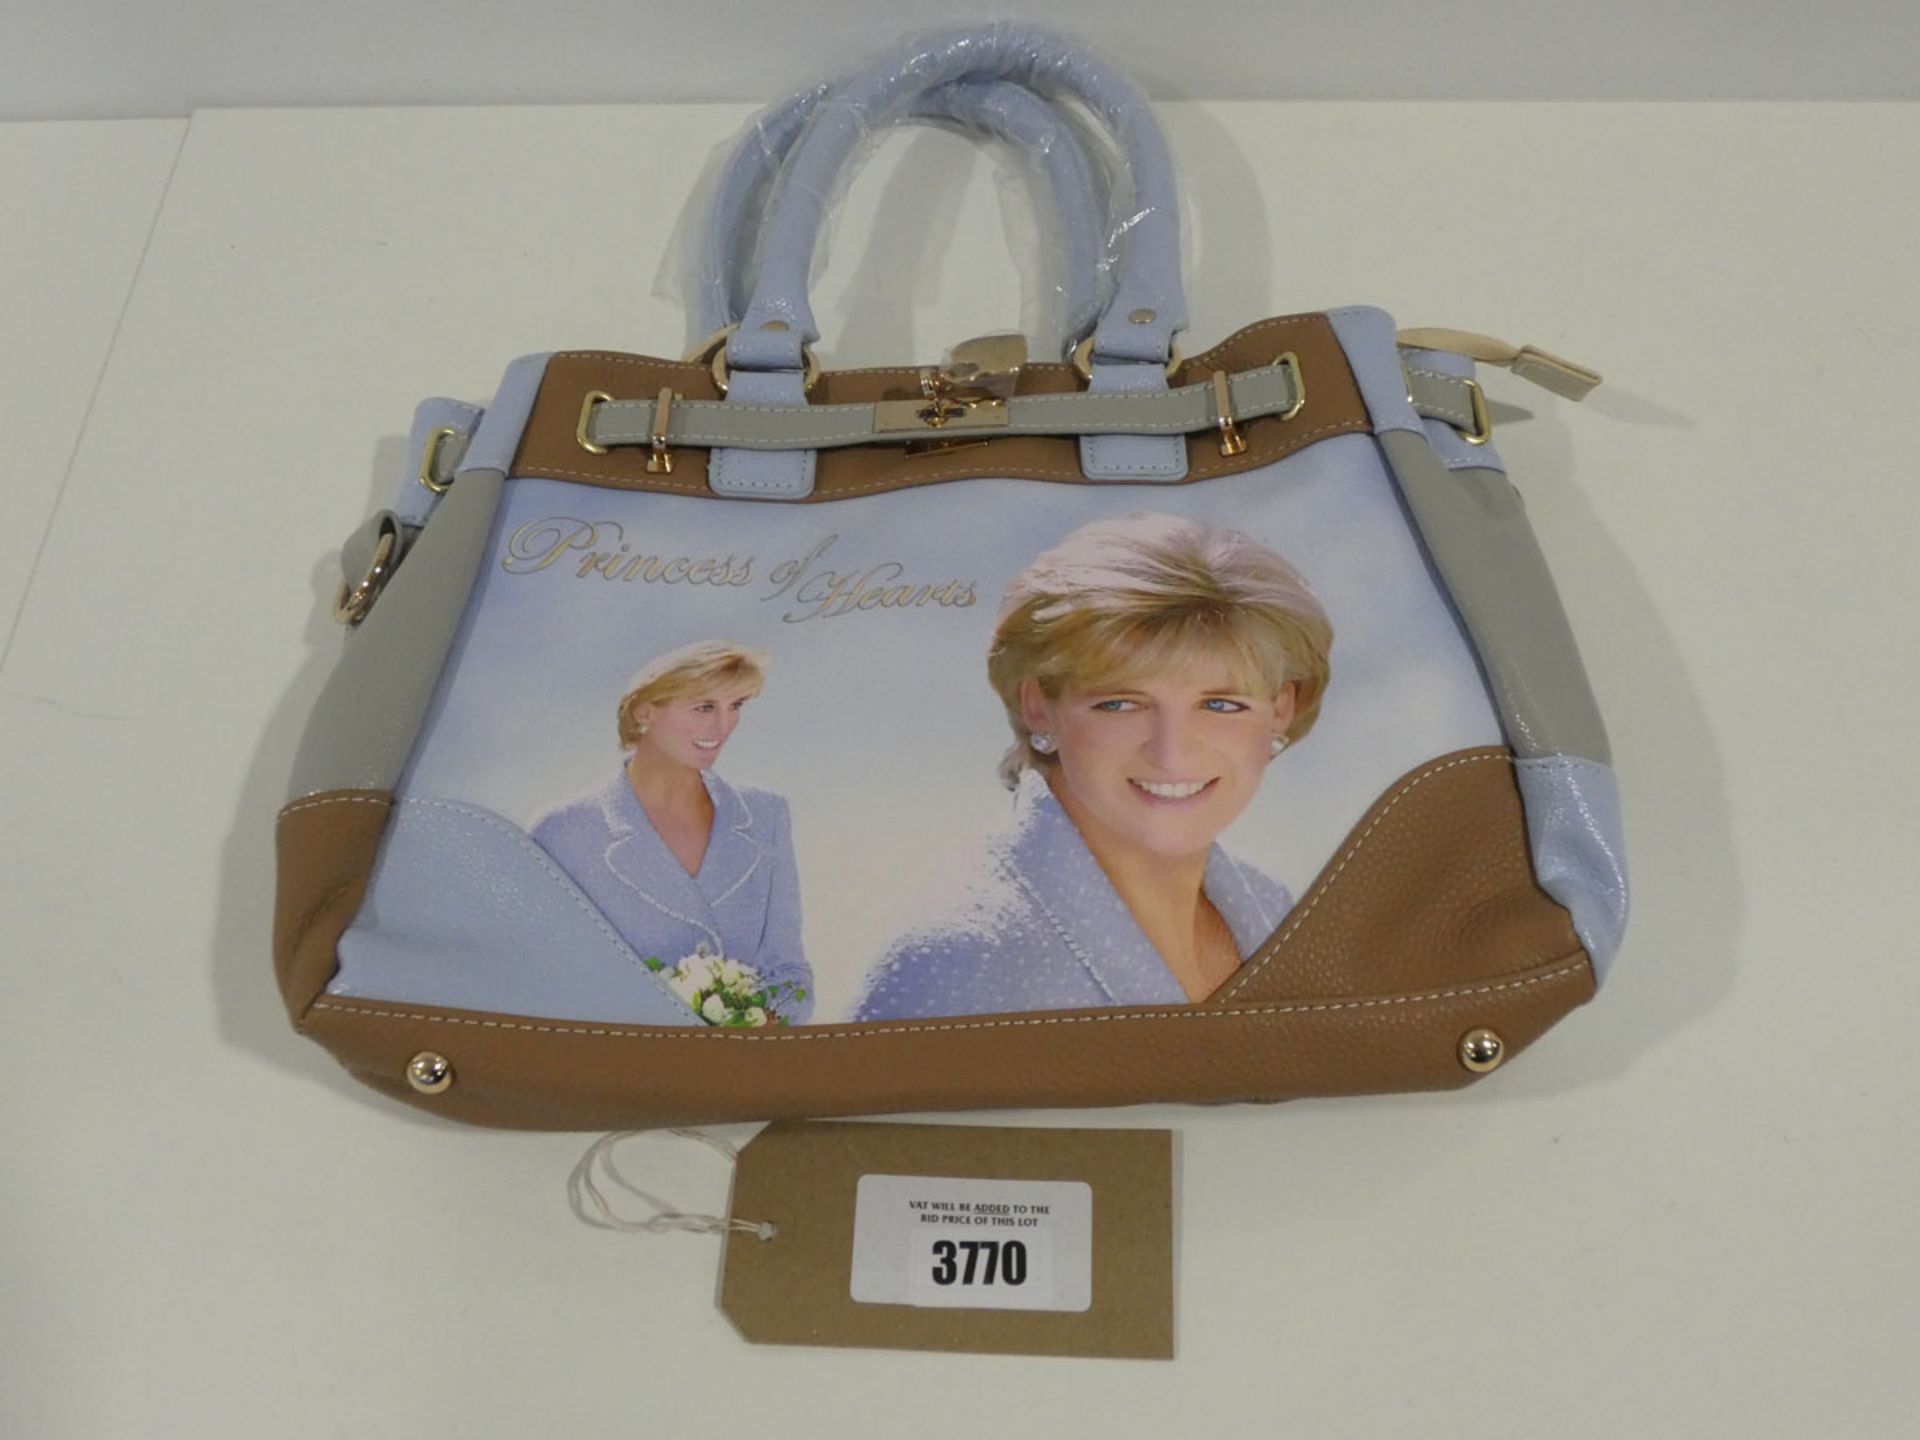 The Bradford Exchange princess of hearts Princess Diana bag